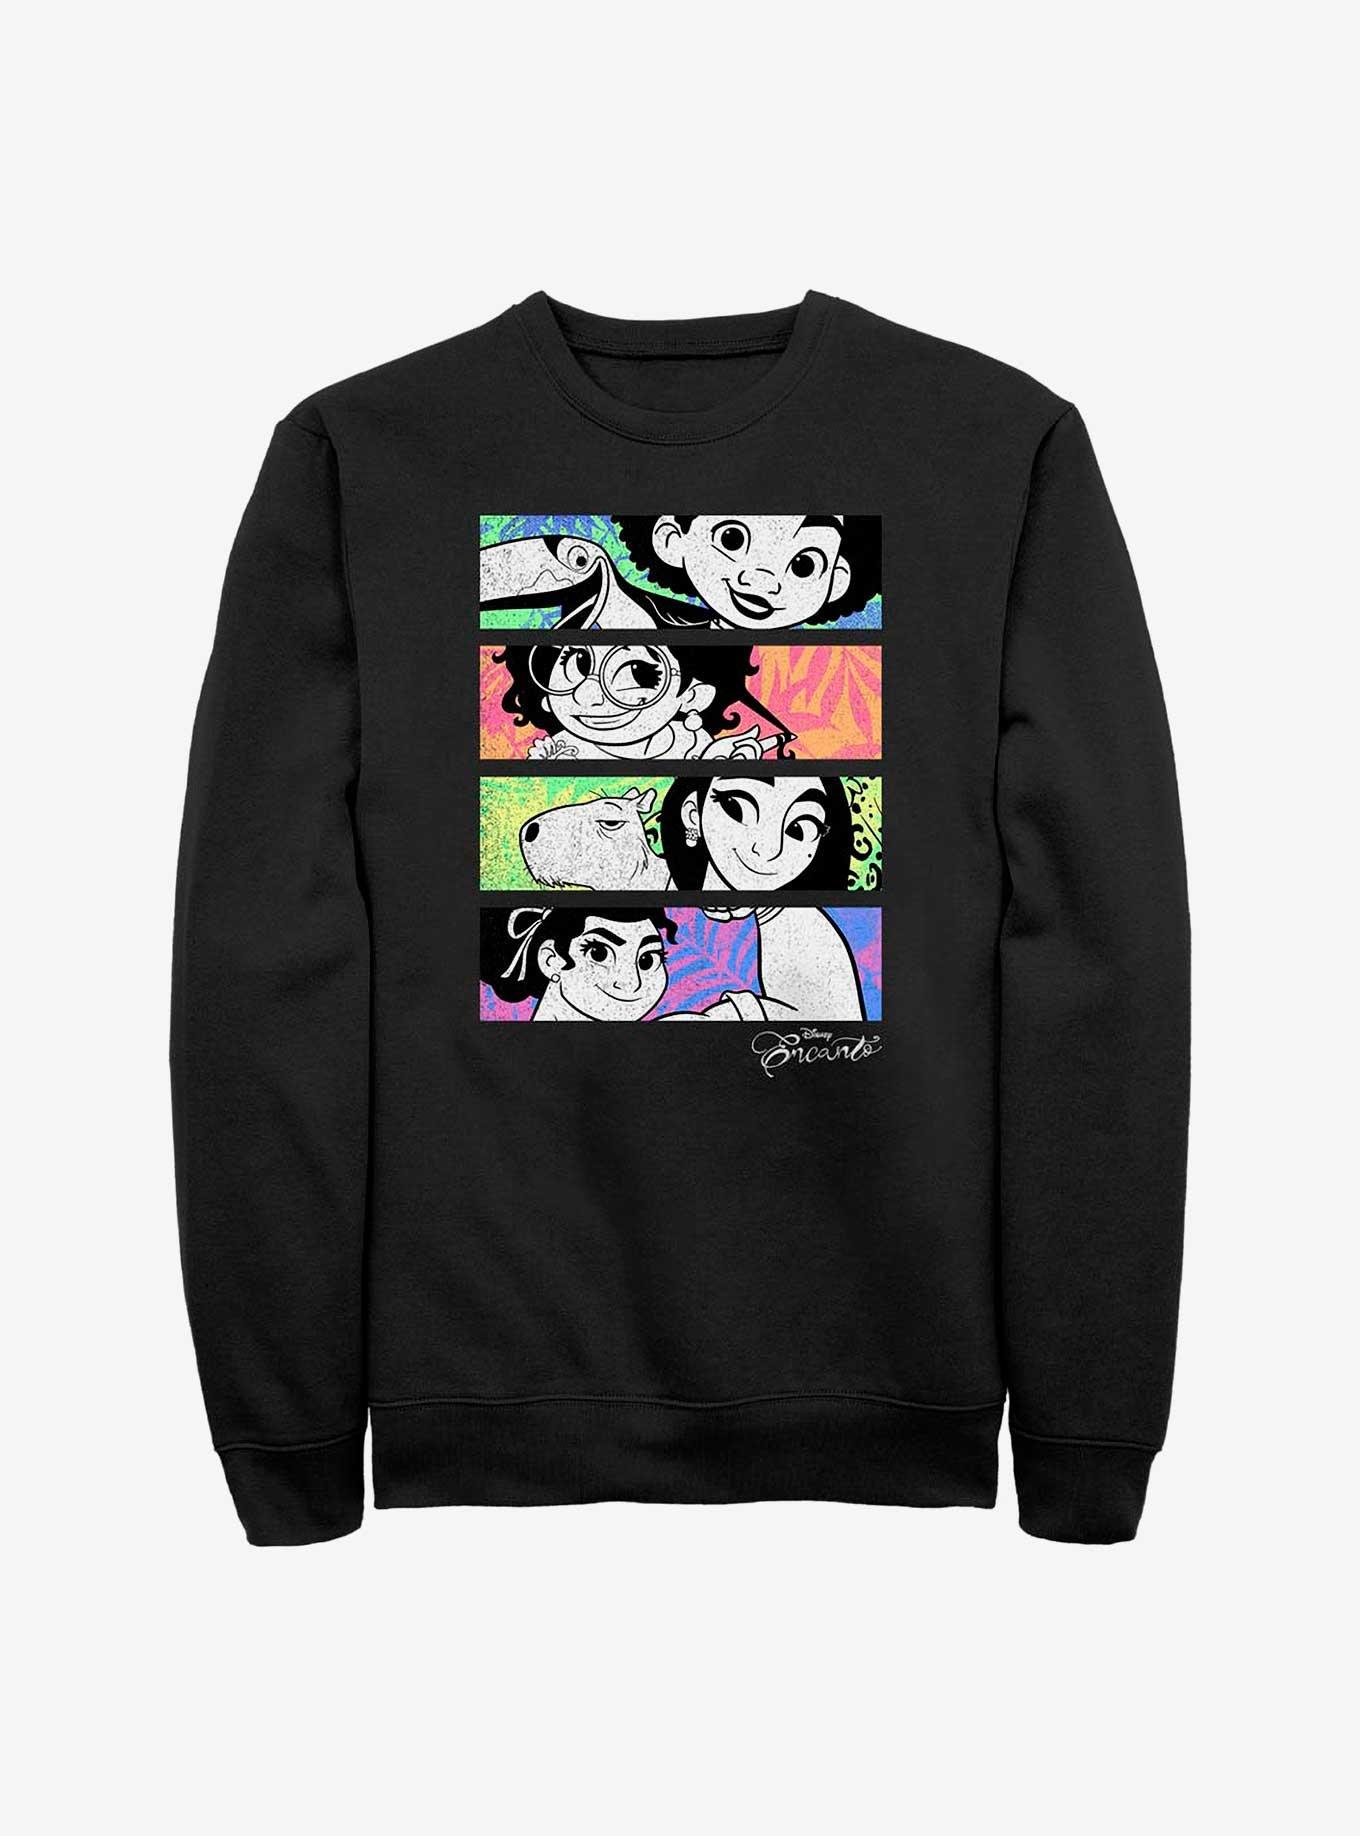 Disney Encanto Four Box Family Sweatshirt